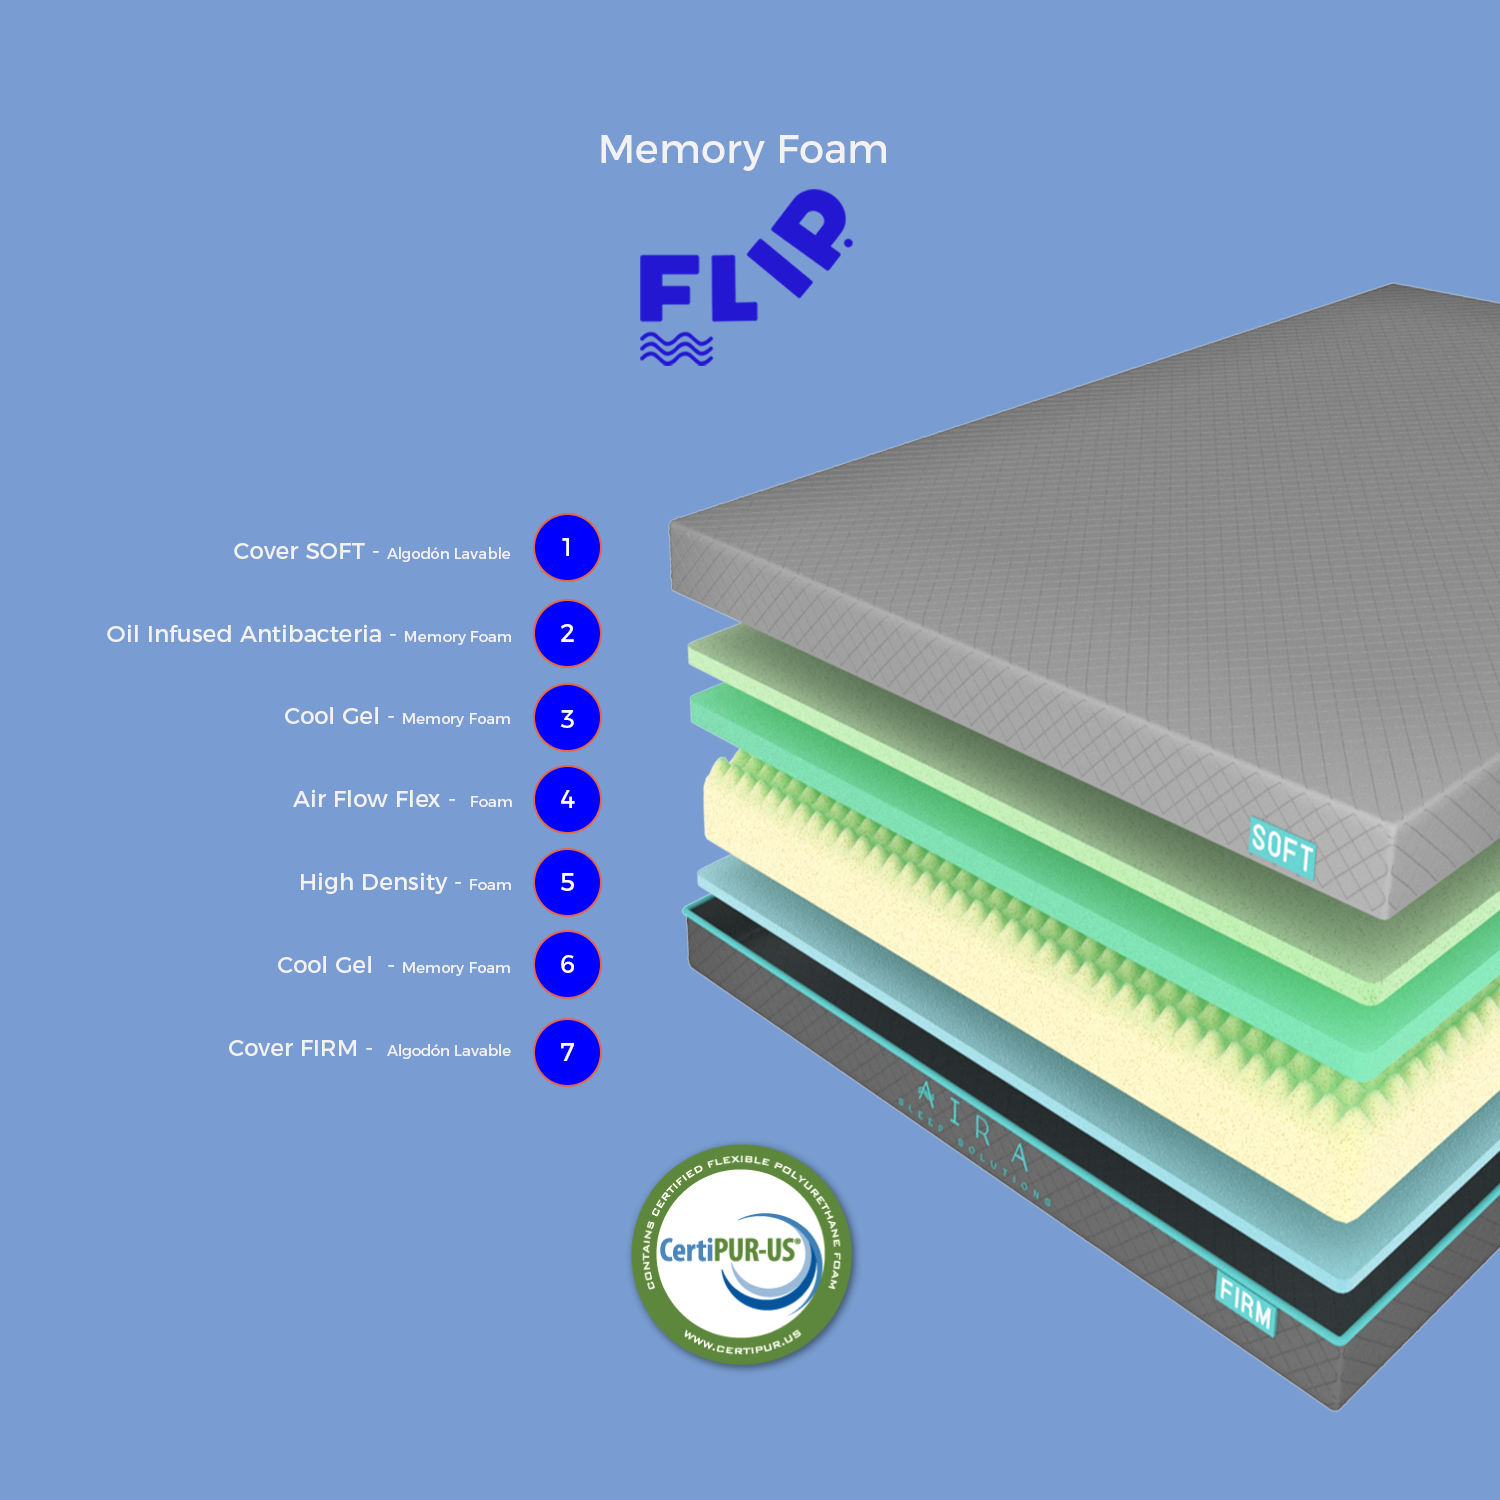 AIRA FLIP Colchon Memory Foam Doble Vista ( 2 en 1 )Anti acaros, Cool Gel en Caja 10" (25cm) - AIRA SLEEP Colchones Memory Foam | Descuentos